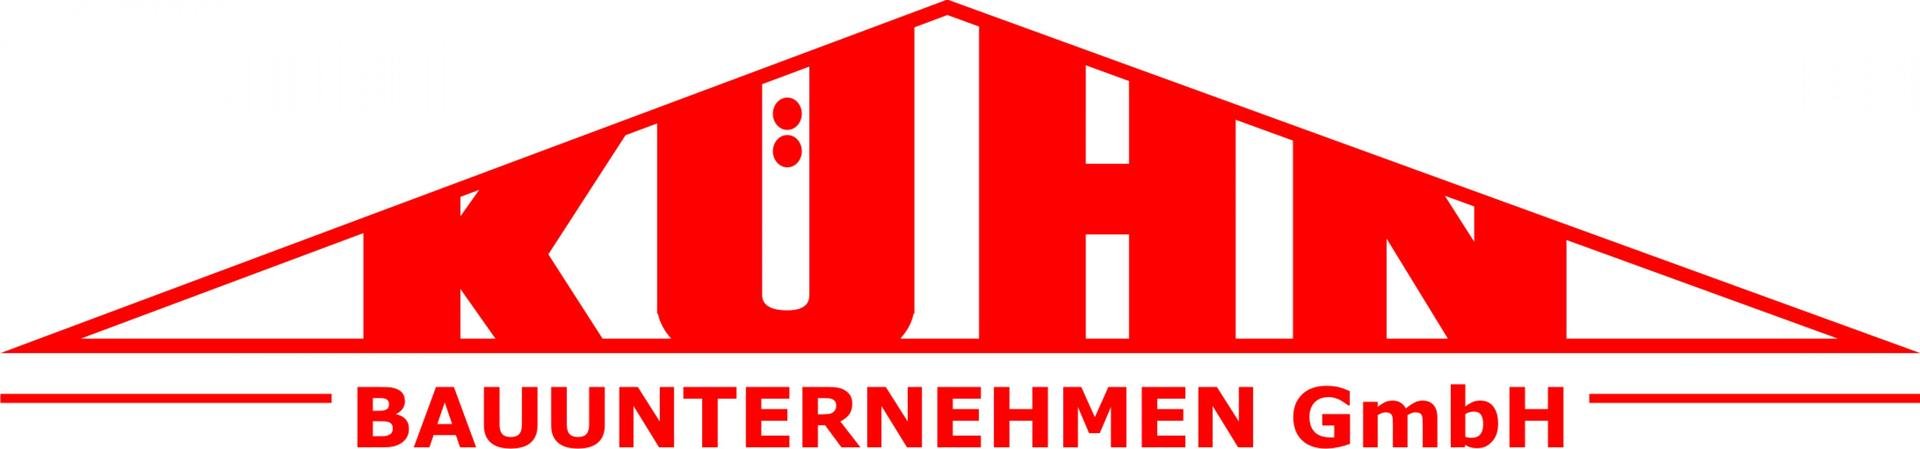 Bauunternehmen Kühn GmbH Logo